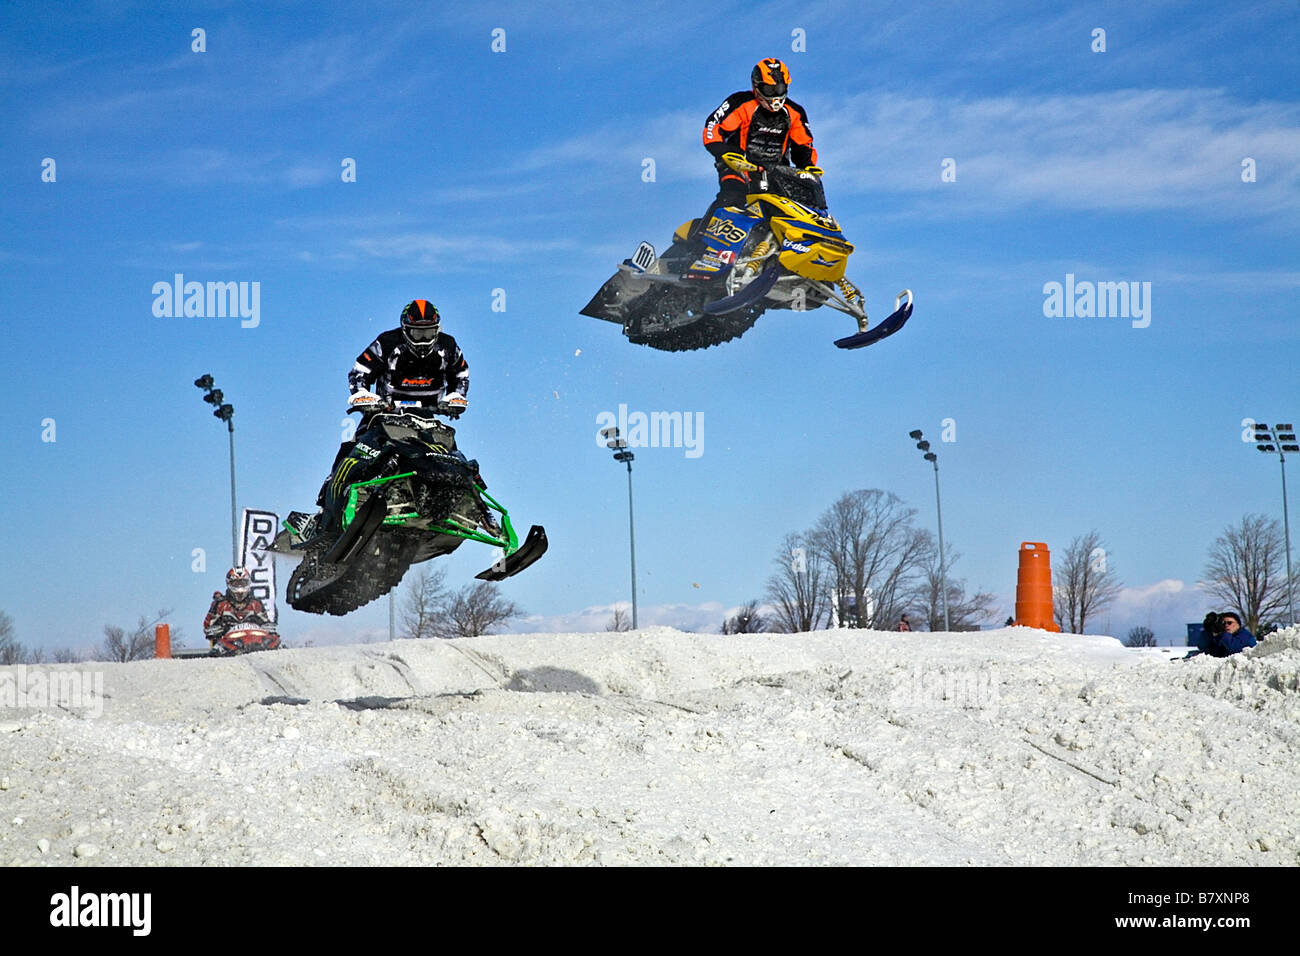 Snowcross Motor Race with Snowmobiles in Ontario,Canada Stock Photo